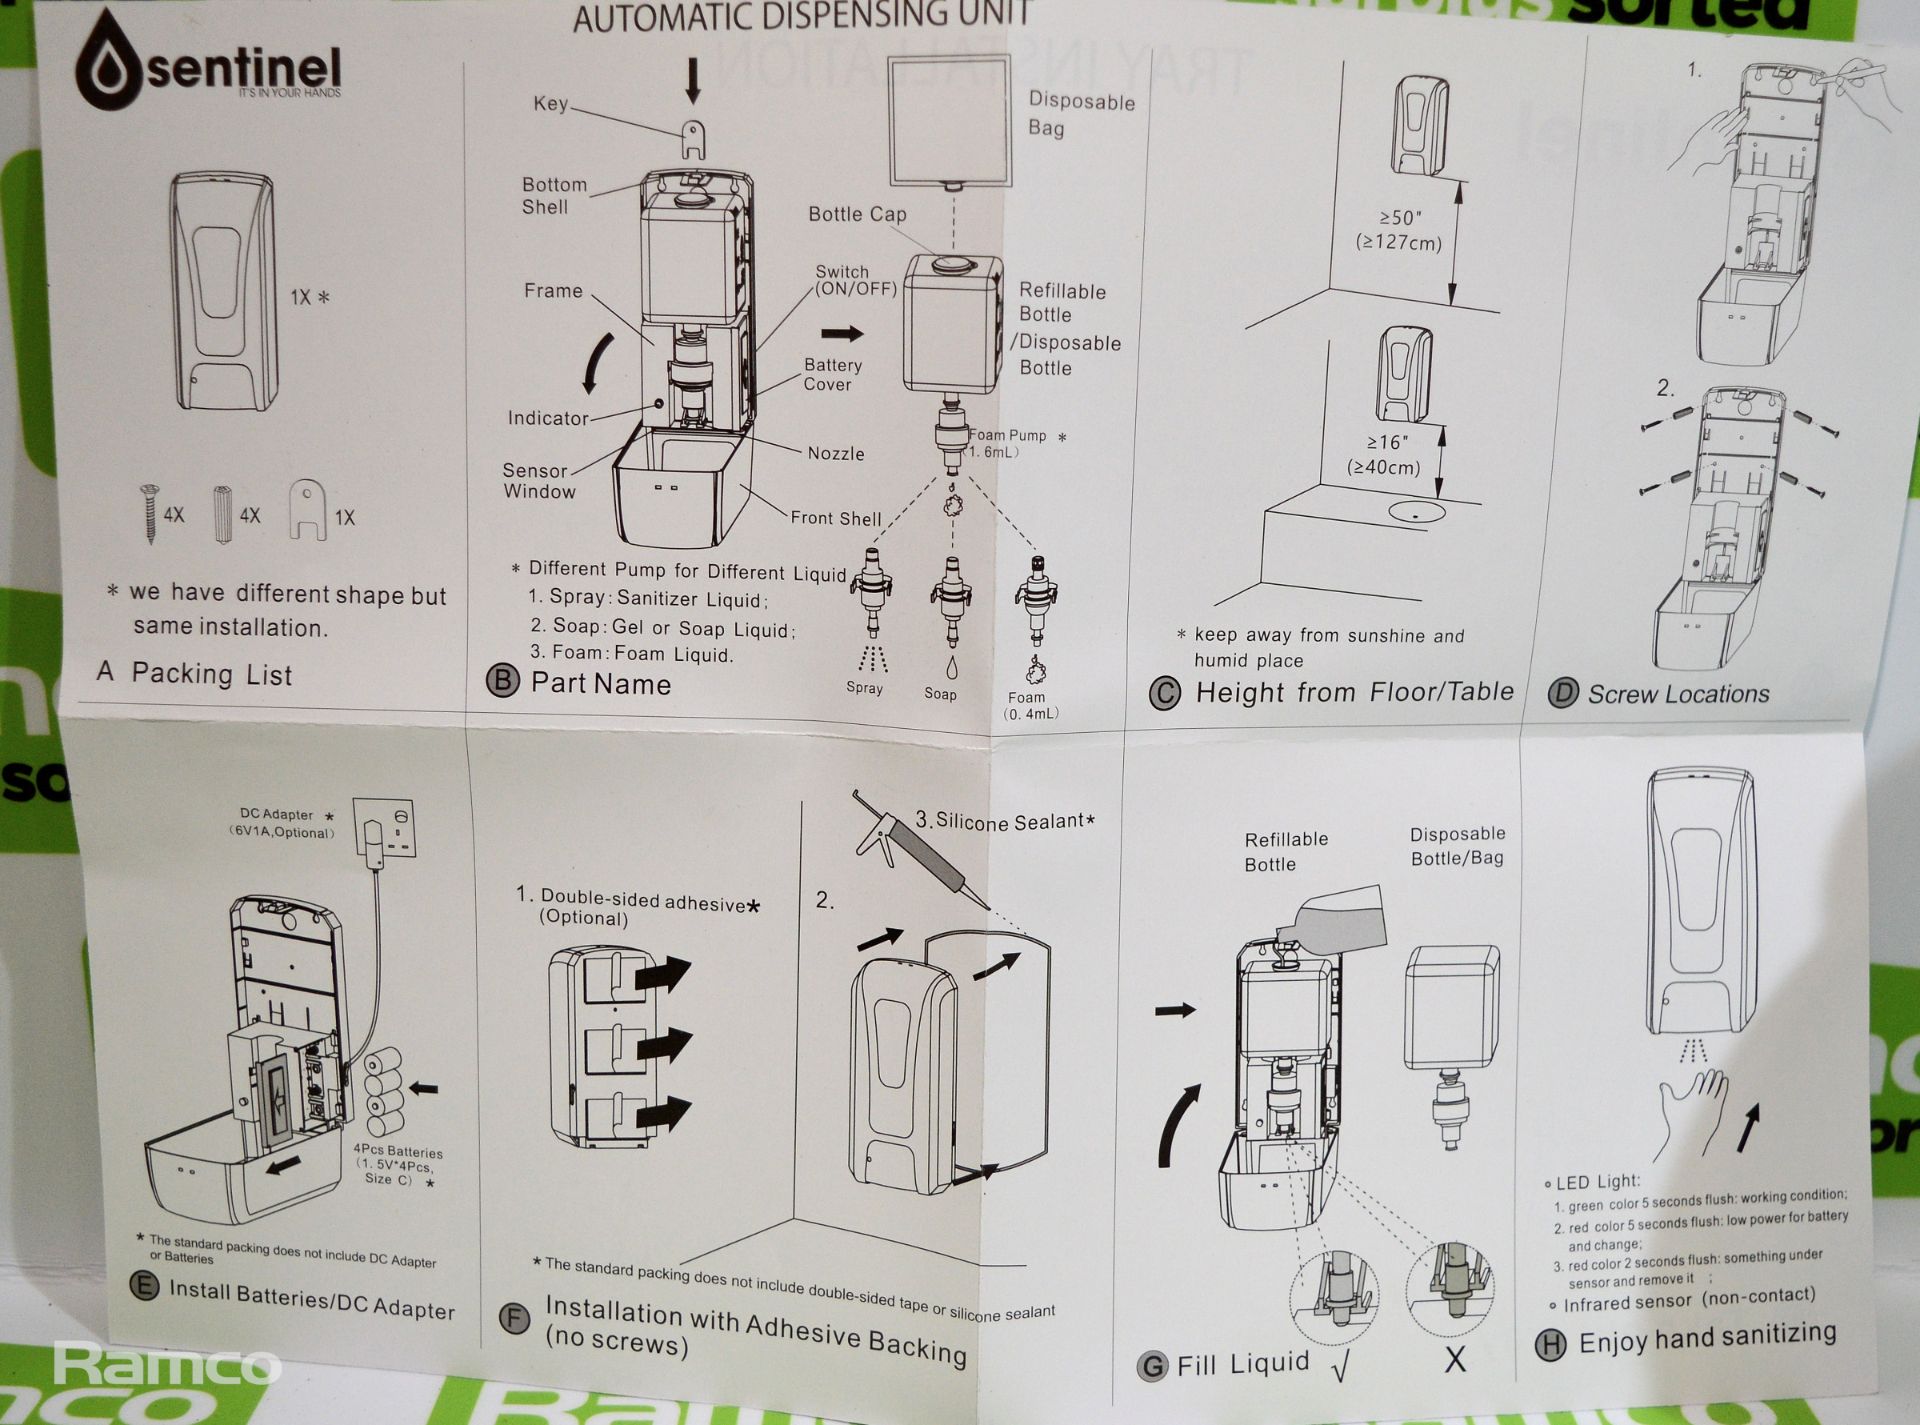 2x Sentinel soap/antibacterial hand gel wall dispensers - Image 3 of 5